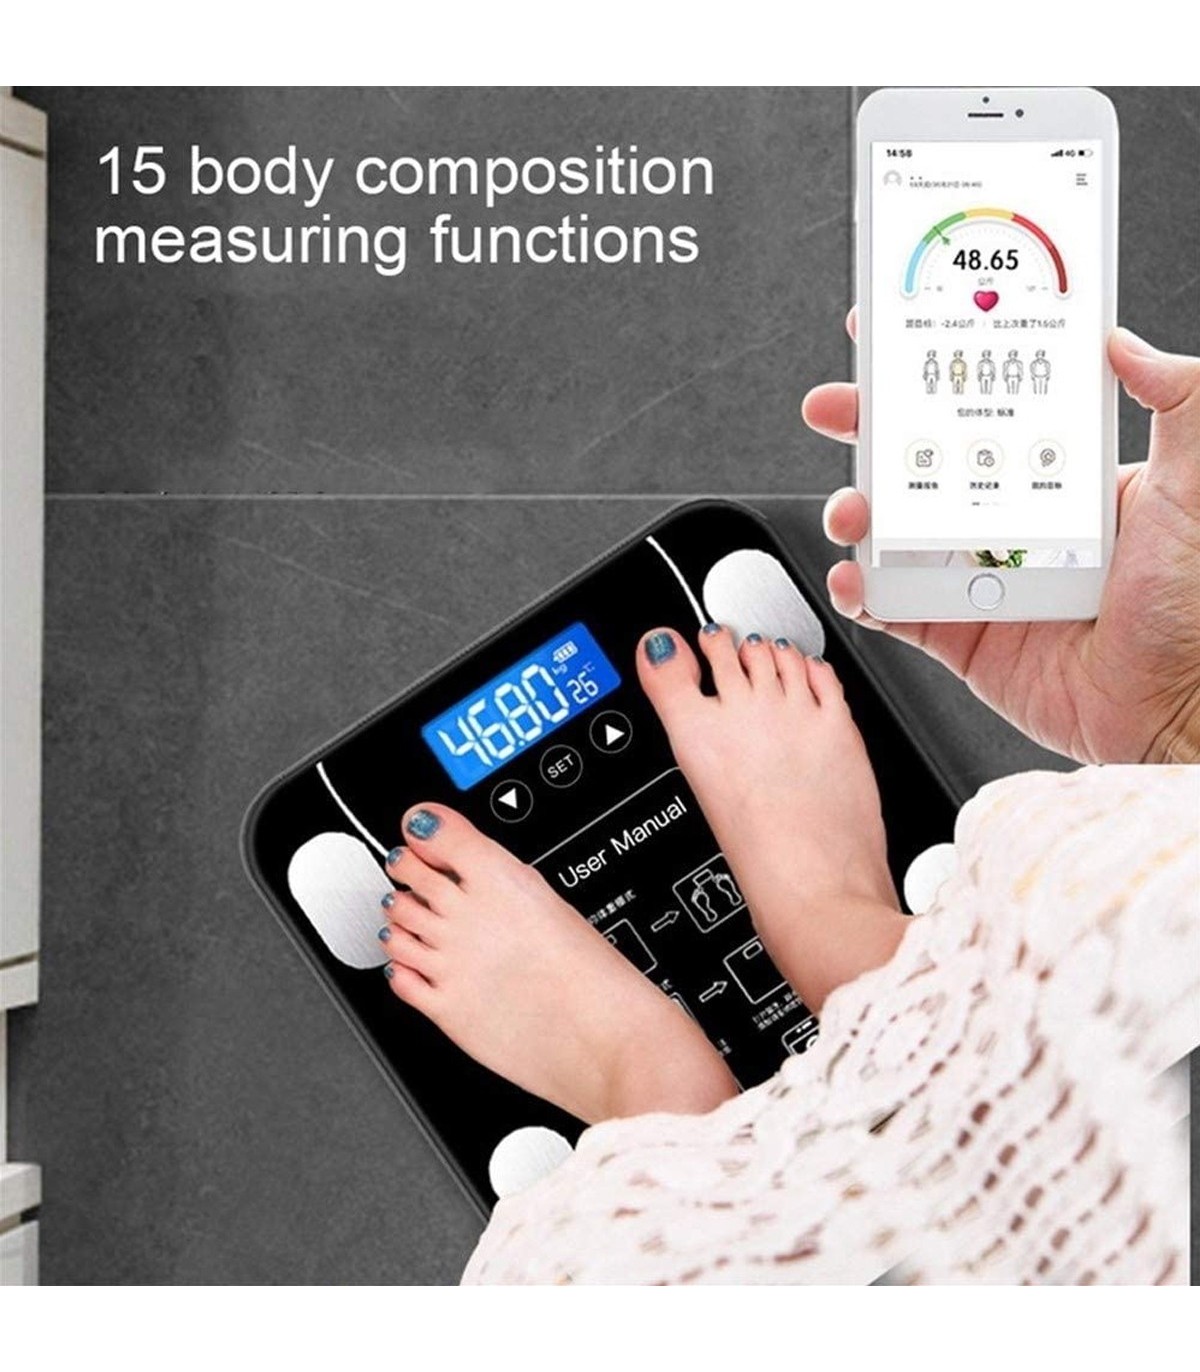 Bascula Digital de peso corporal, pantalla lcd